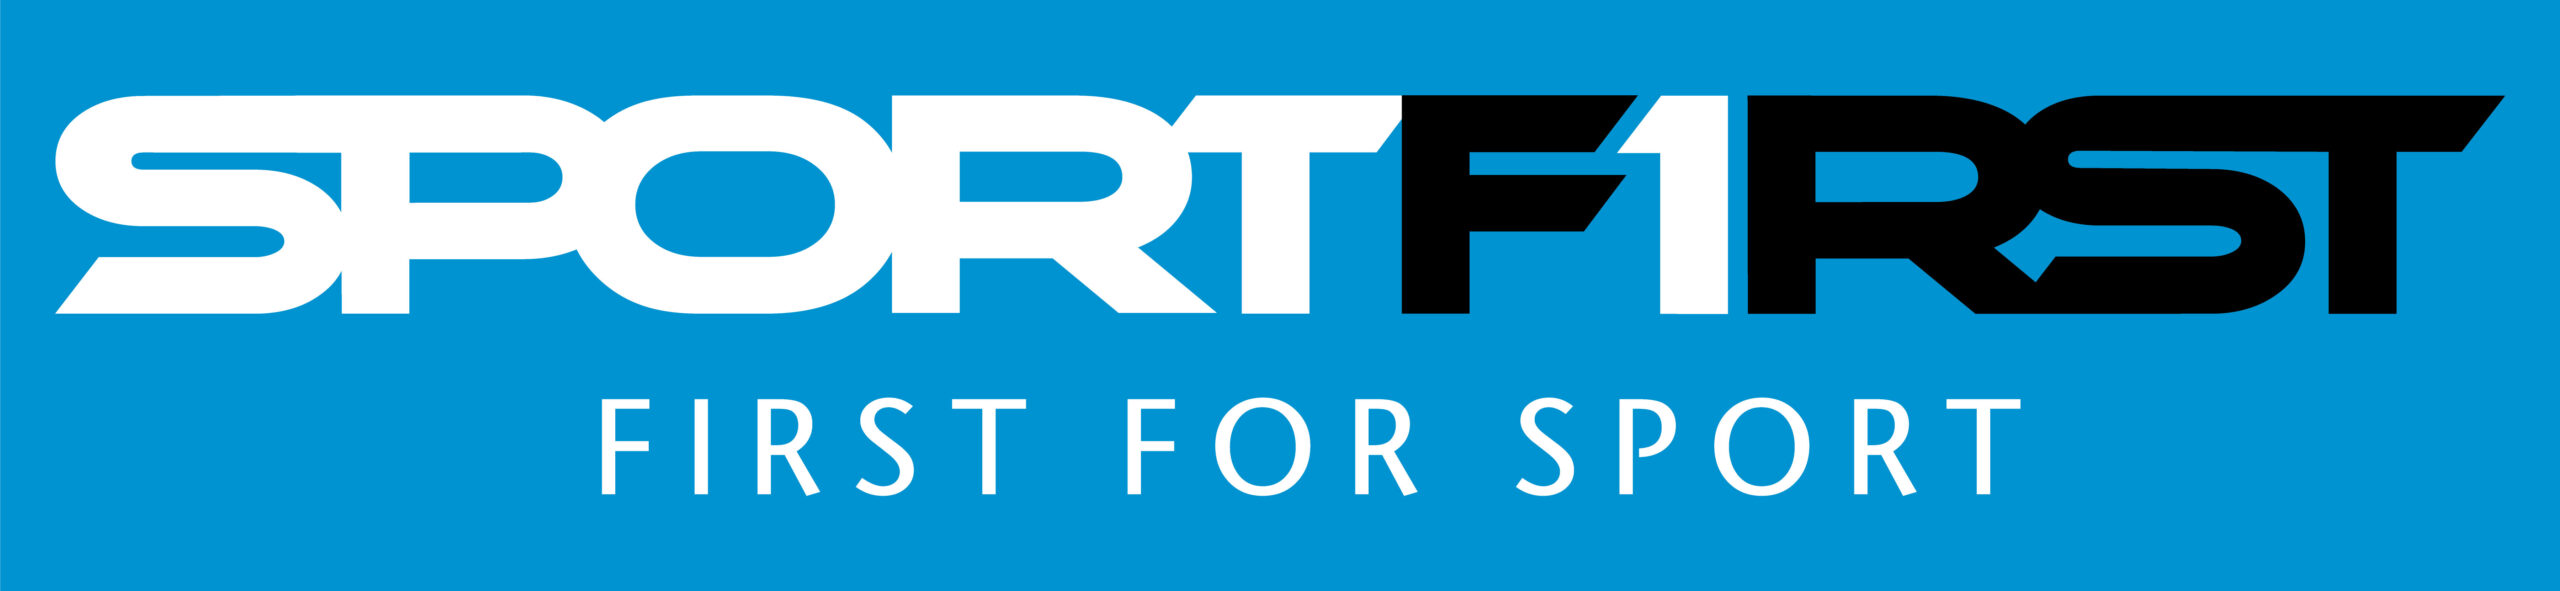 sportfirst logo